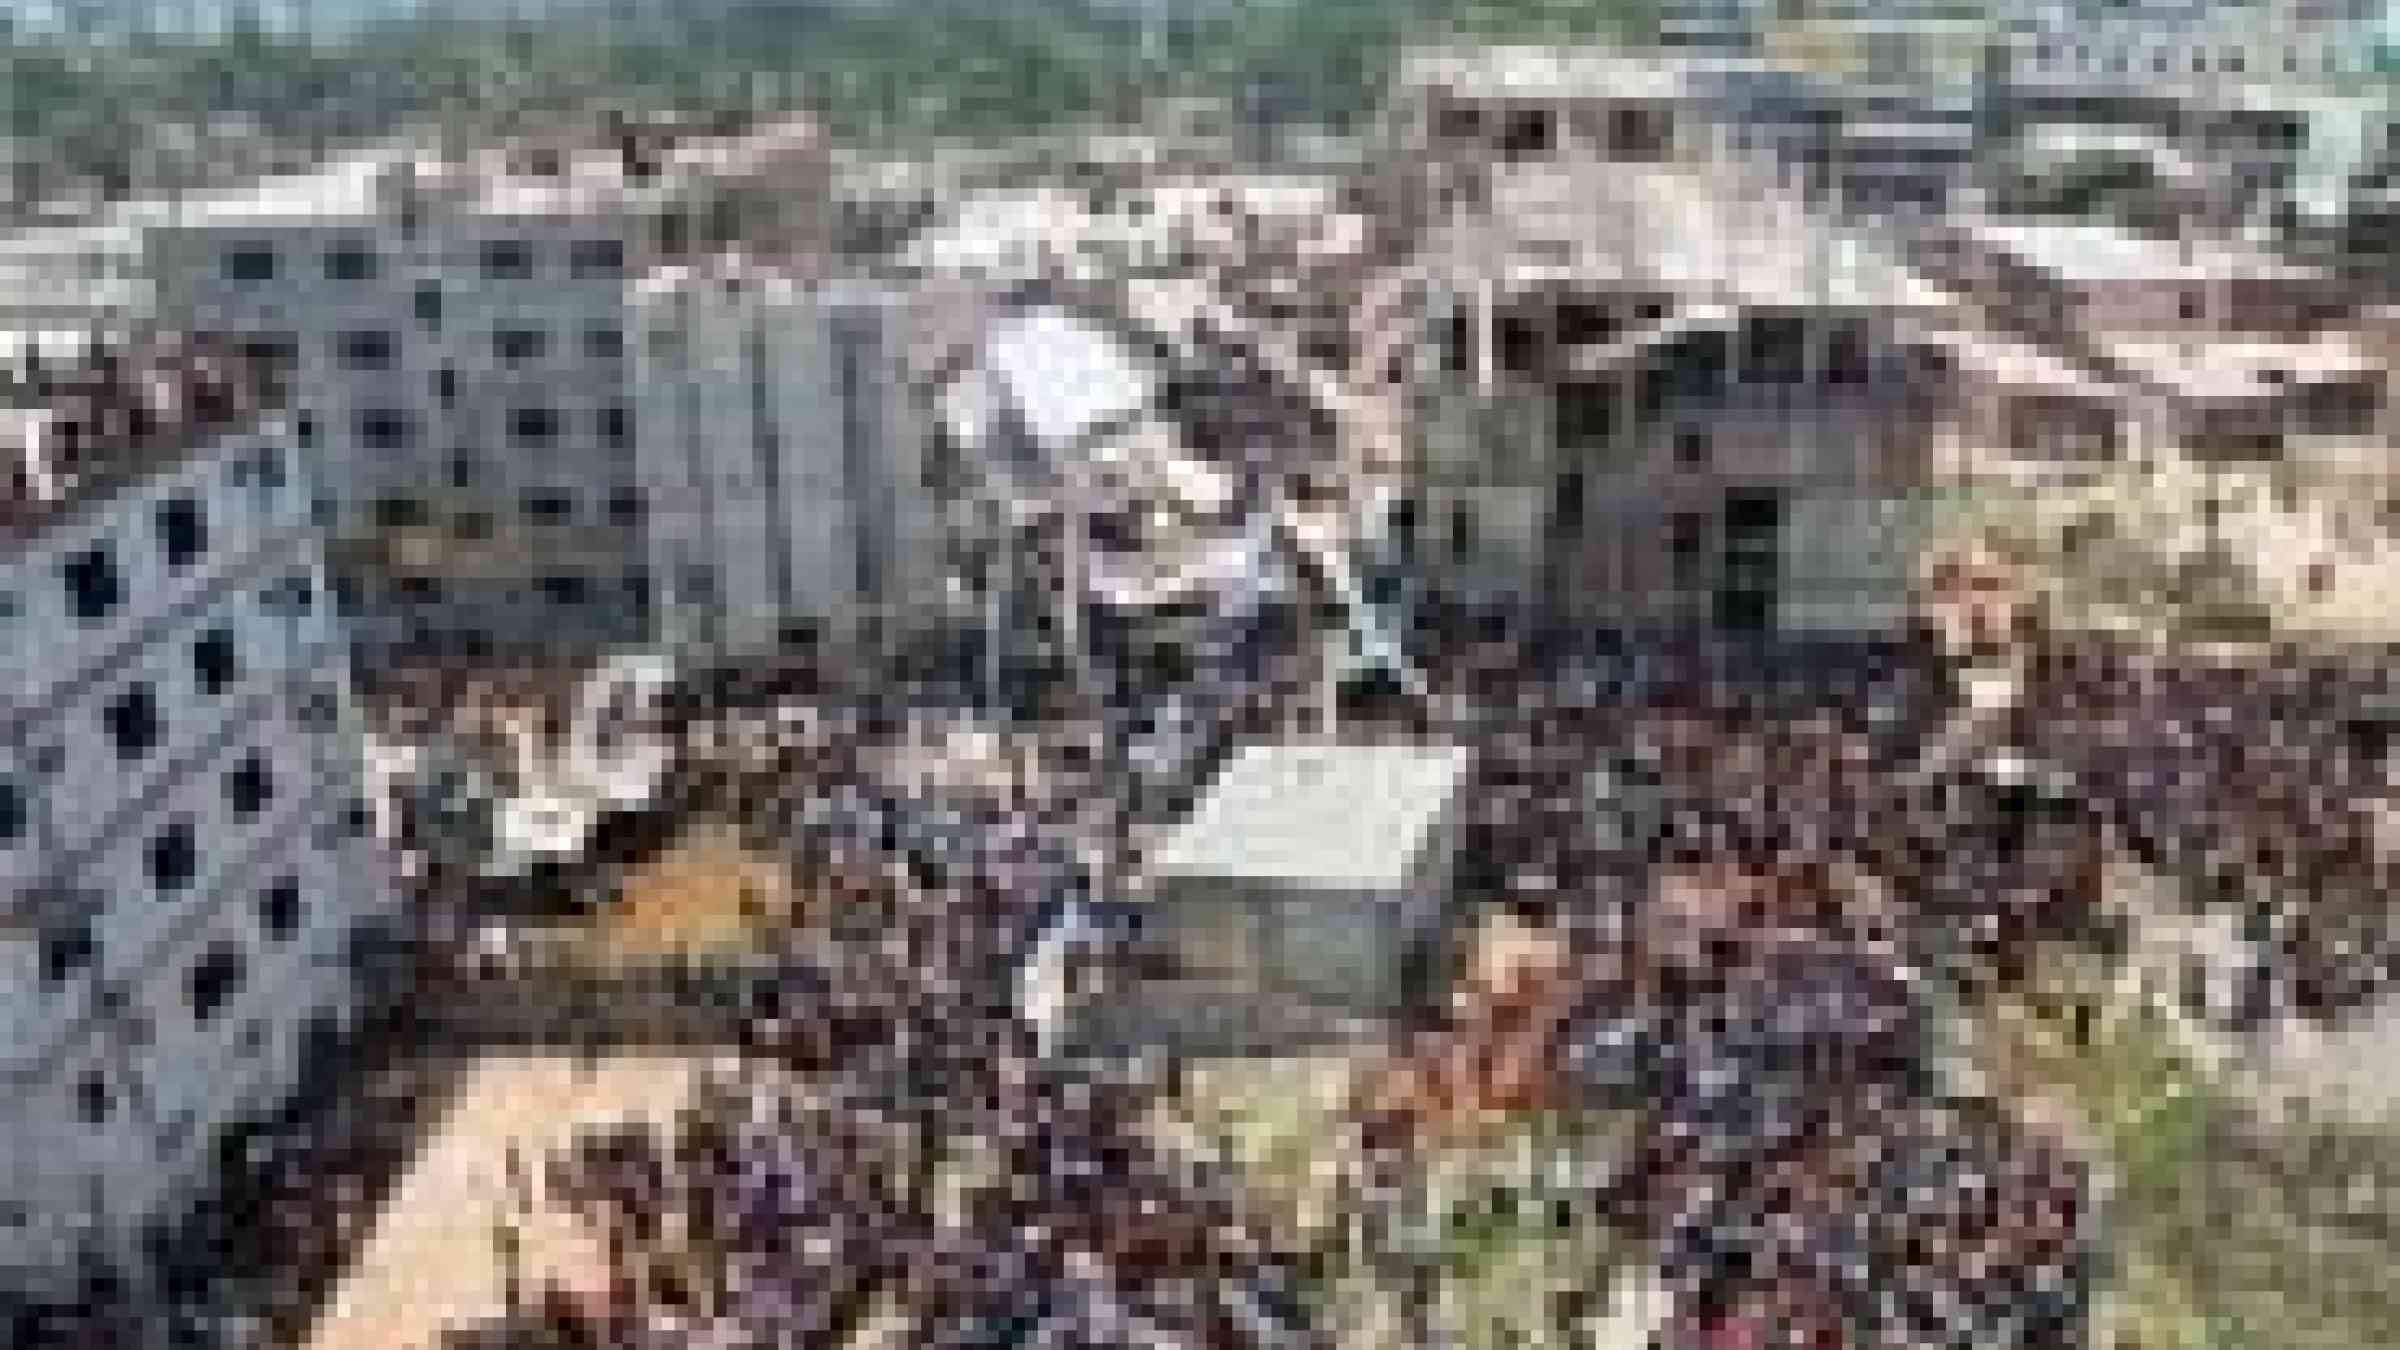 IRIN http://www.irinnews.org/Report/97987/Analysis-Wake-up-call-for-Bangladesh-s-building-industry